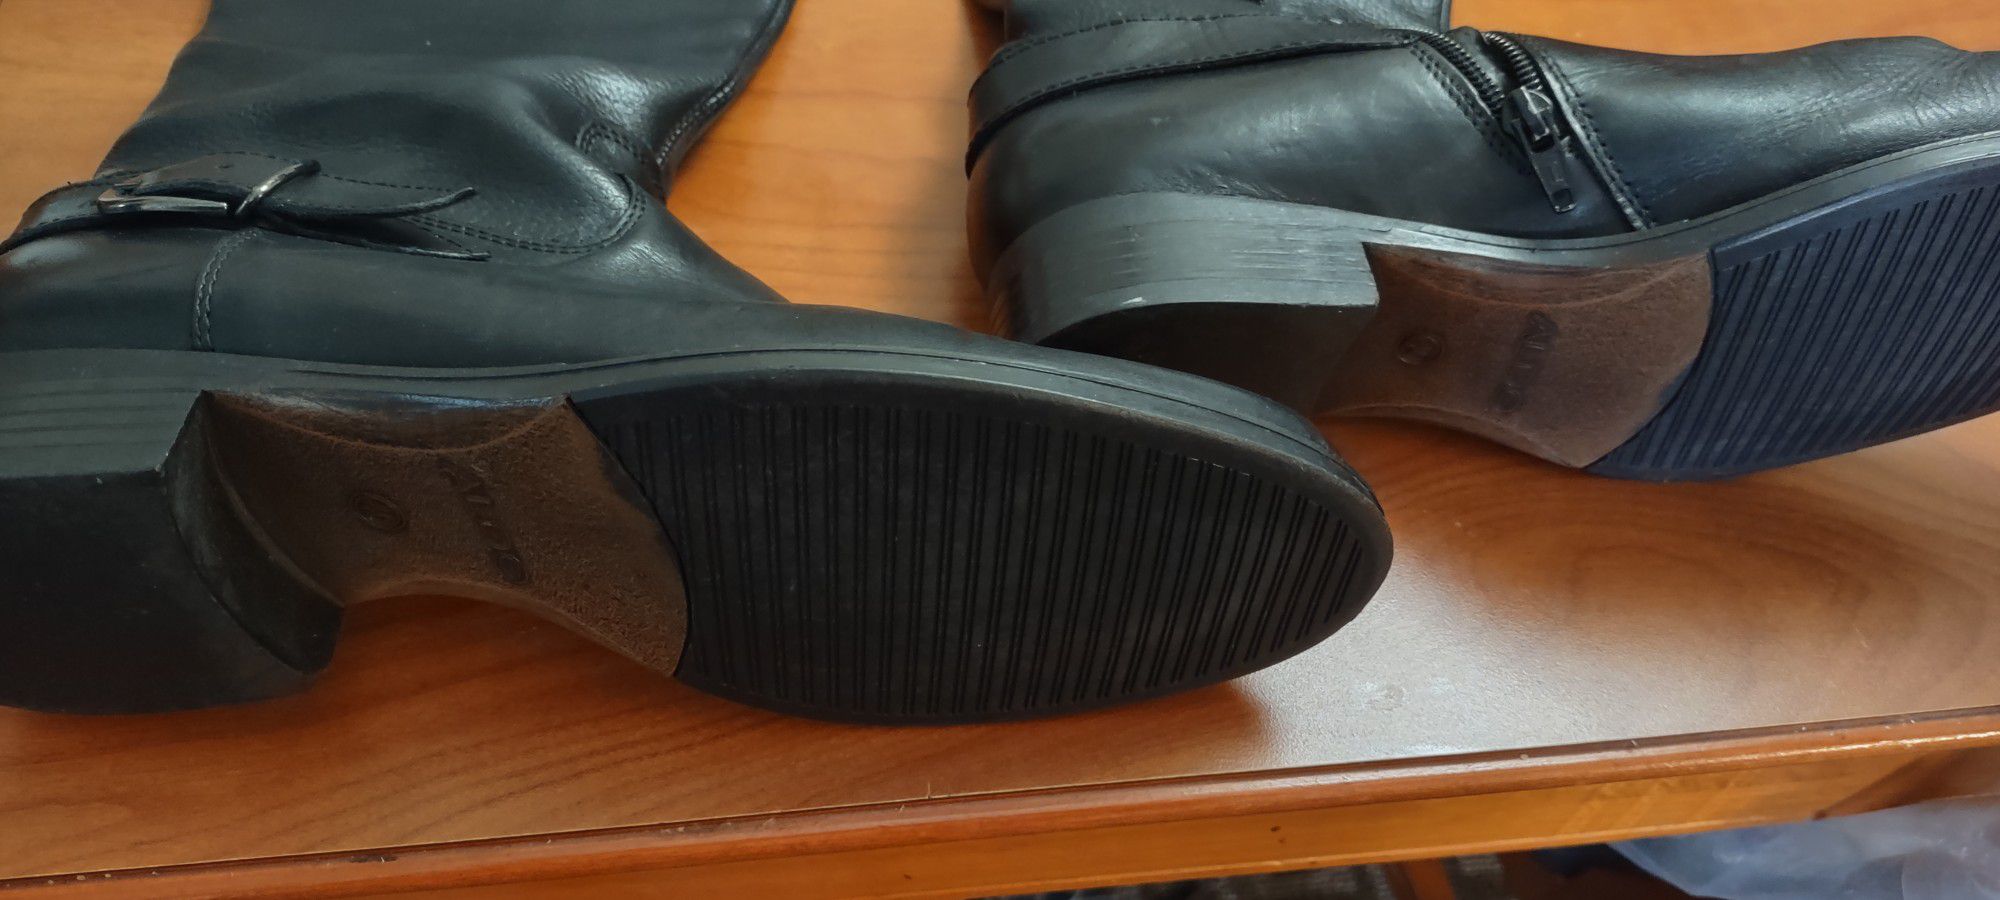 Women boots(ALDO)  Size 10